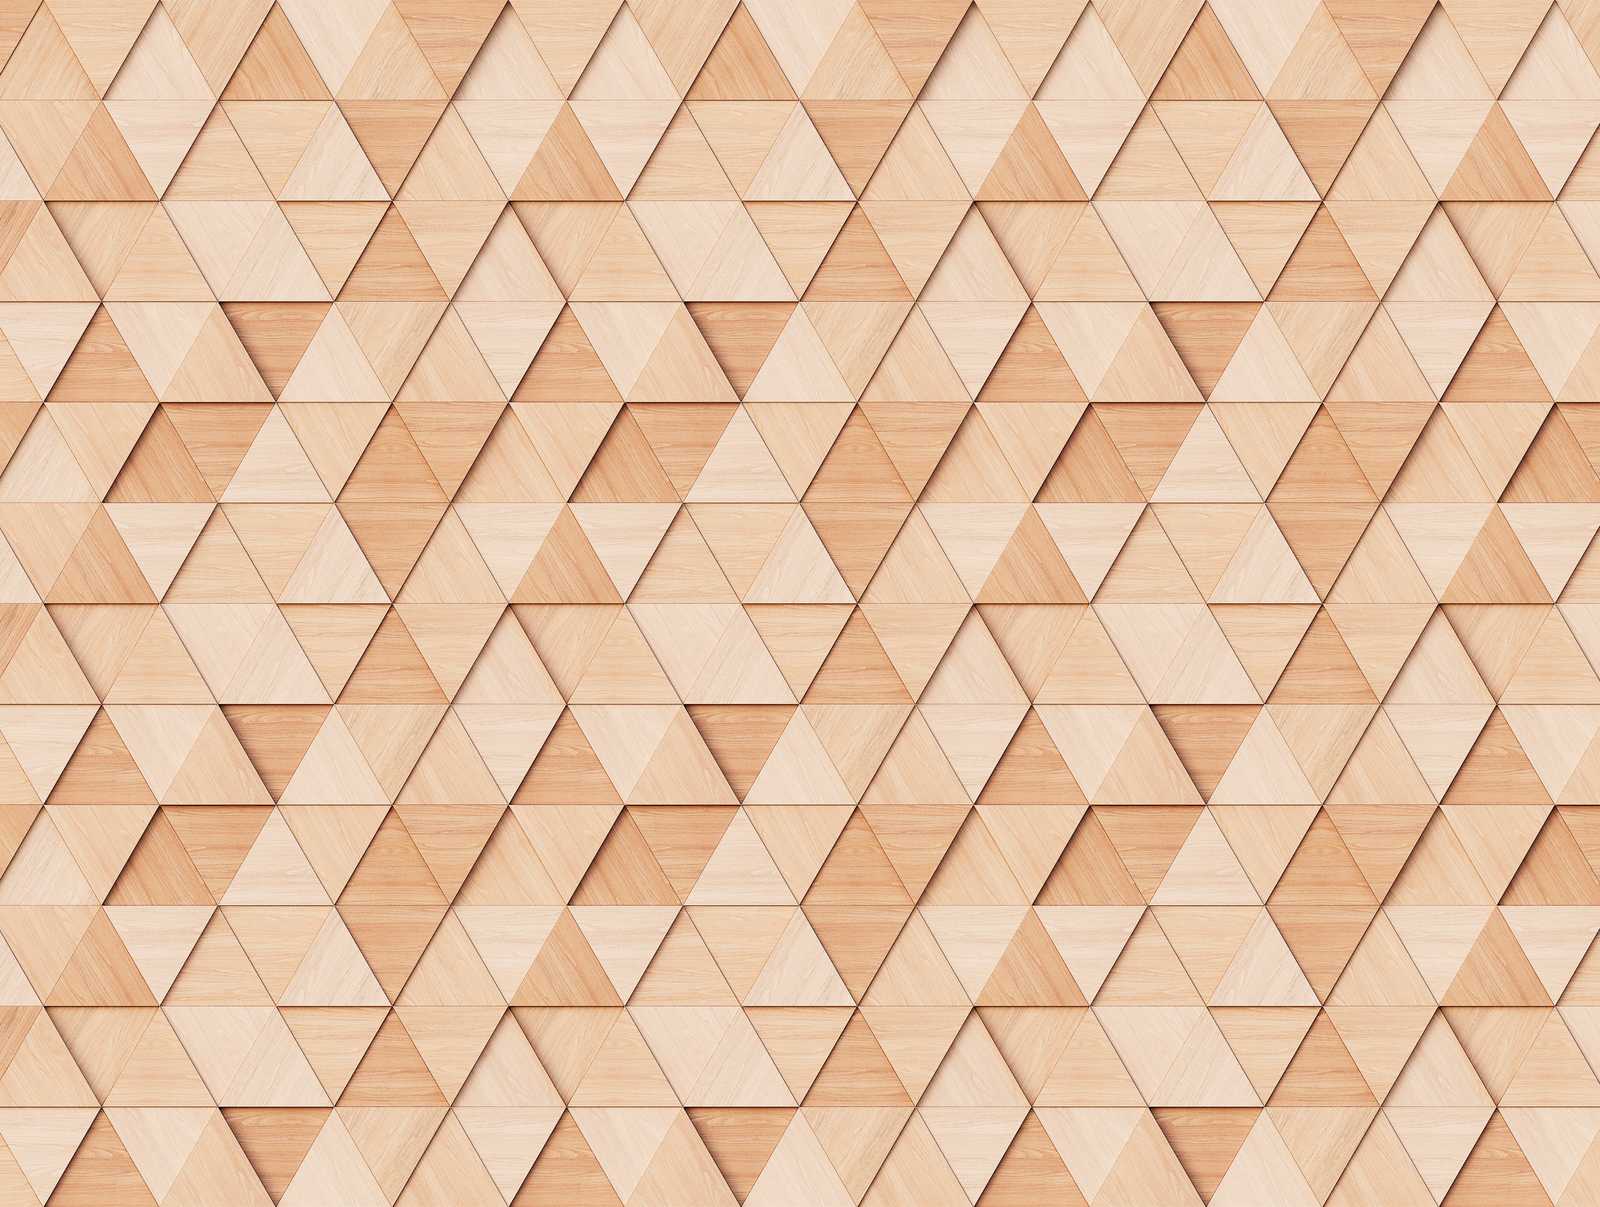             Behang nieuwigheid - motief behang hout-look design met 3D driehoek patroon
        